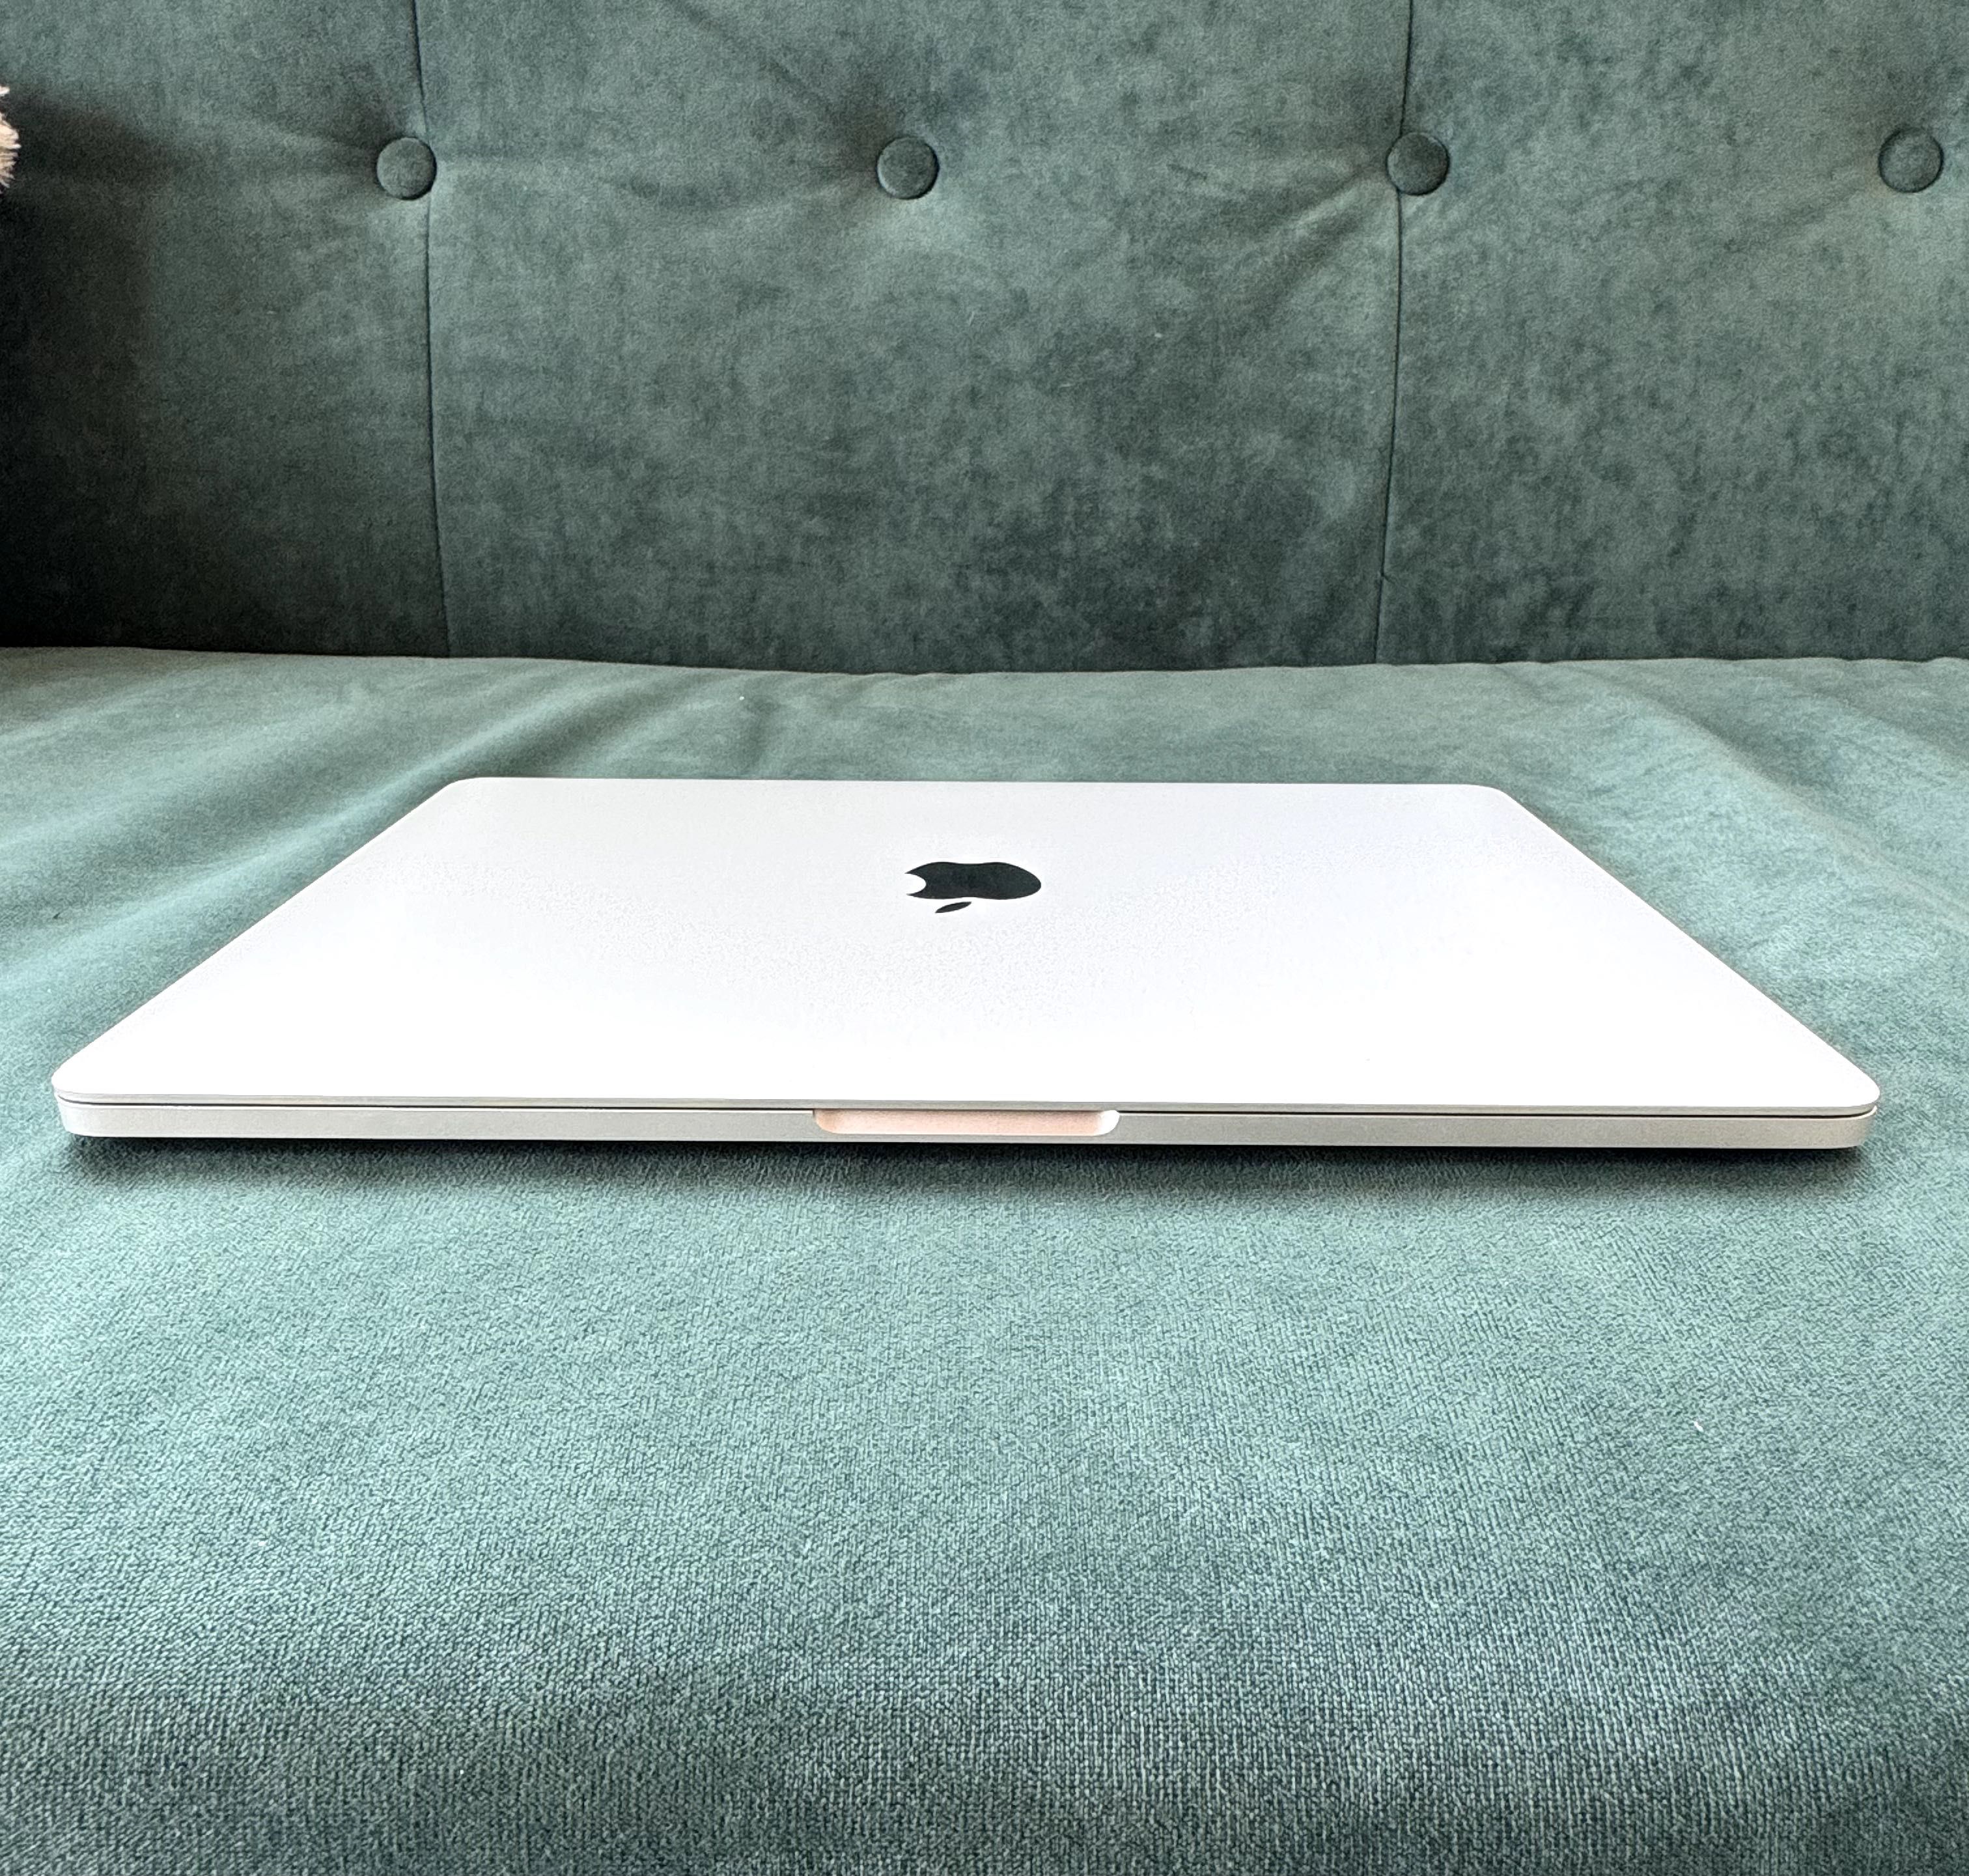 MacBook Pro 13 2020 m1,16Gb,512ssd Магазин Гарантія